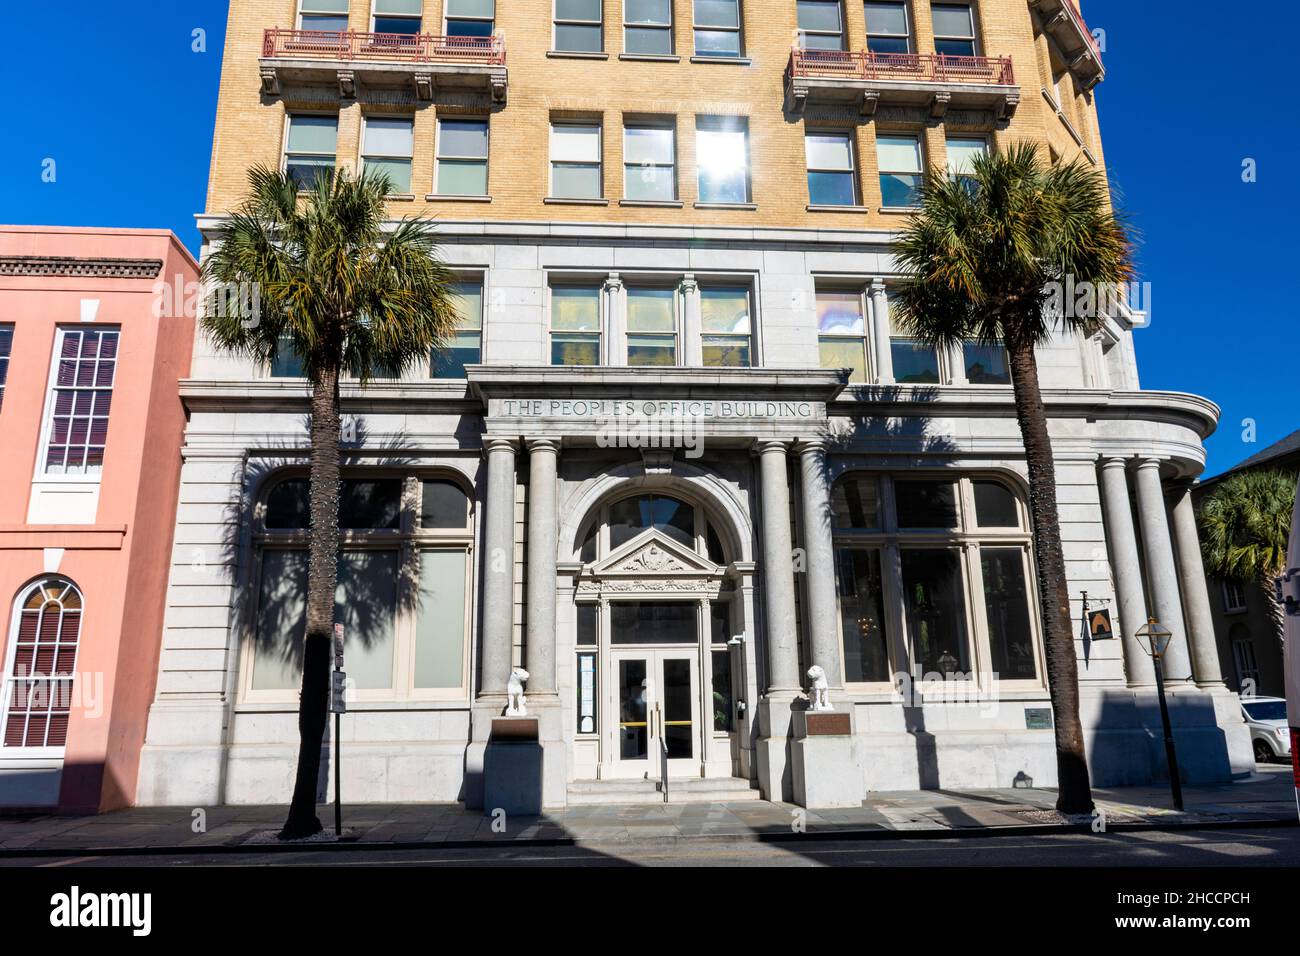 Charleston, South Carolina, USA - 27. November 2021: Das Peoples Office Building in der historischen Altstadt. Stockfoto